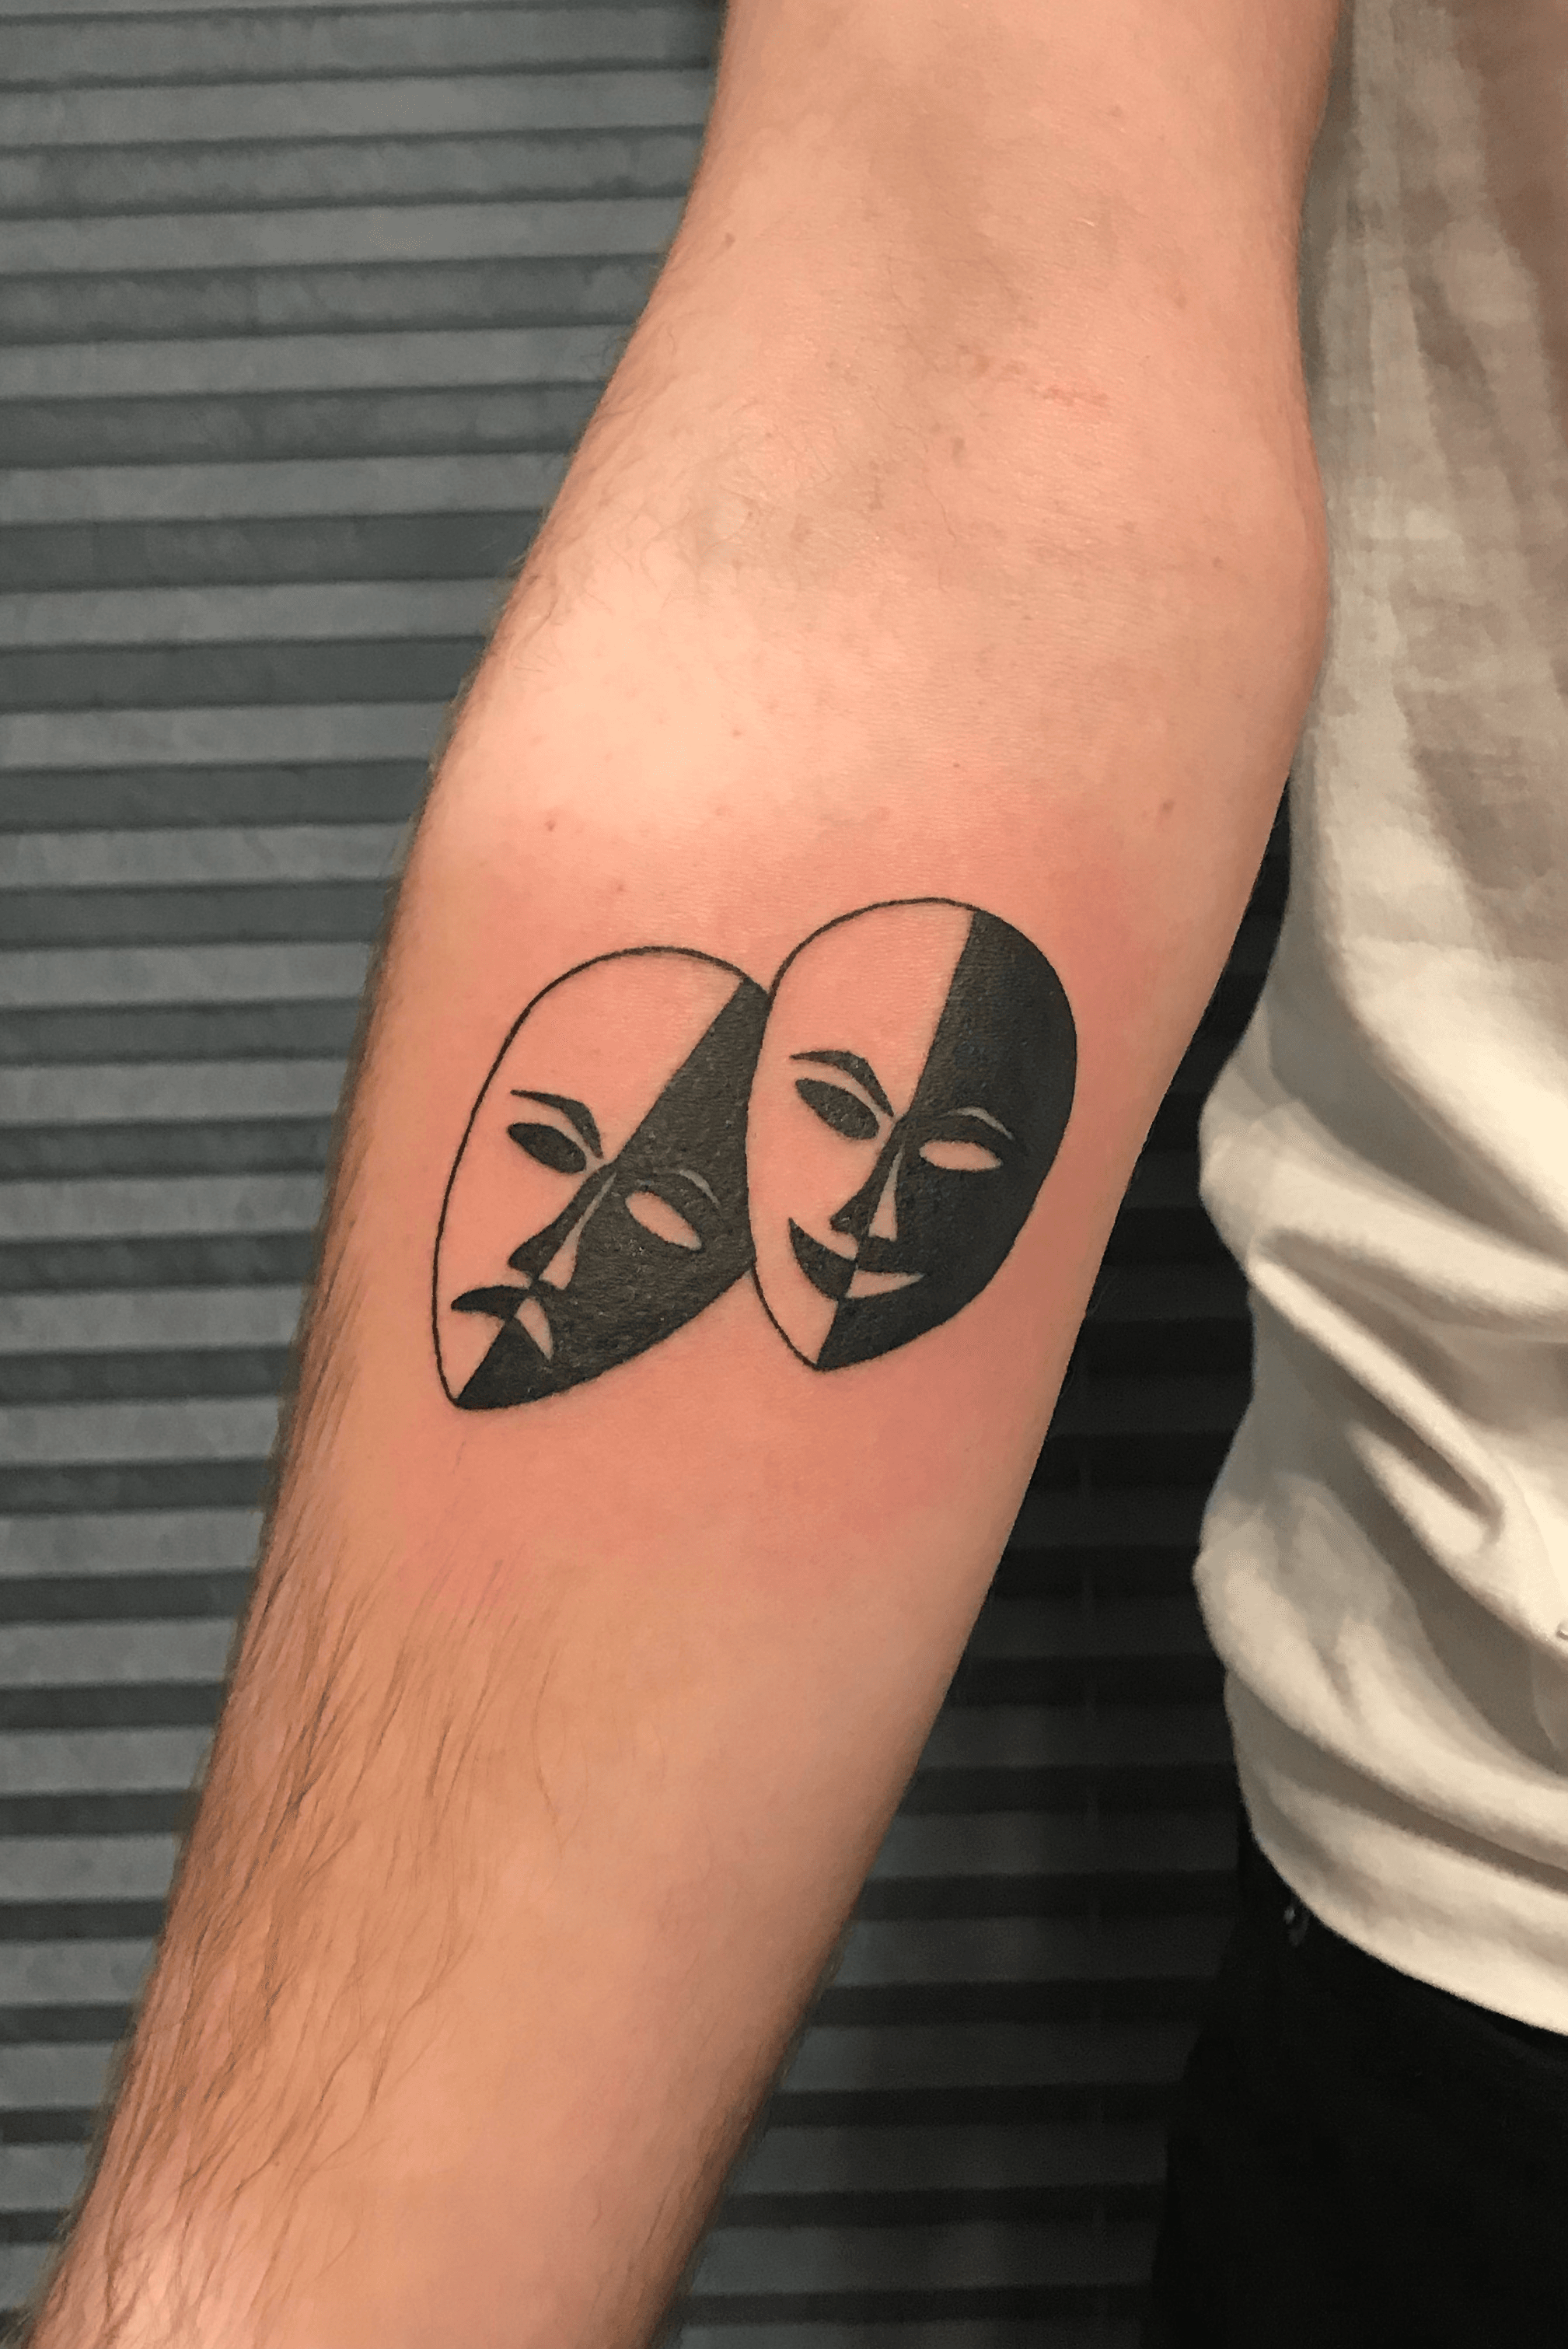 Sluier Succes rand Tattoo uploaded by Dominik syn grzegorza • Masks #Black #mask #masks #happy  #sad #tattoo #ink #inked #polska #gdansk #sopot #gdynia #trojmiasto  #silhouette #minimal • Tattoodo